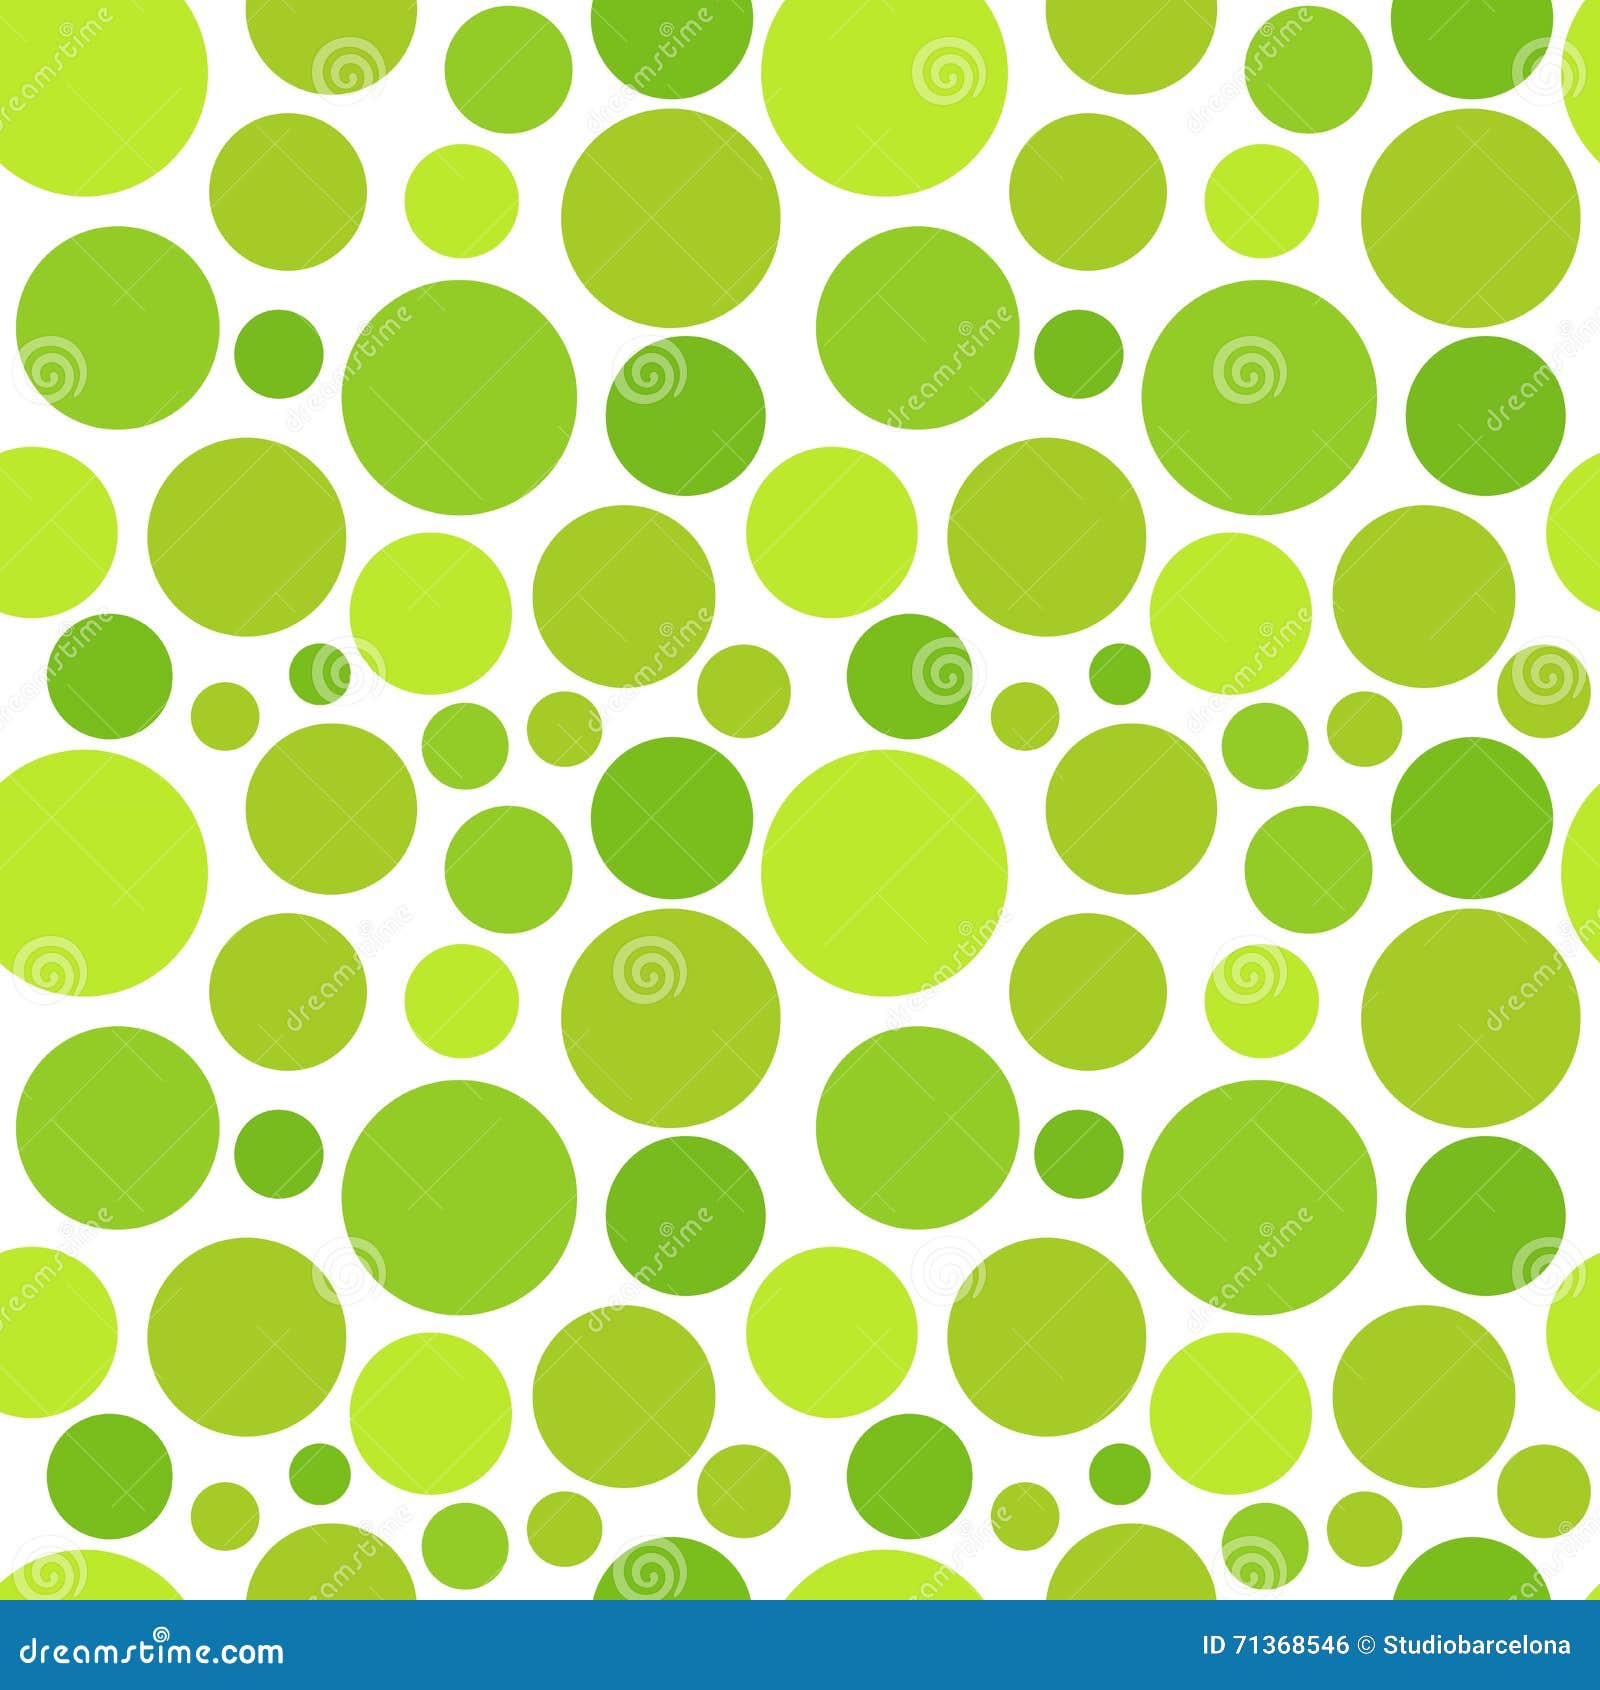 Green dot pattern stock vector. Illustration of background - 71368546